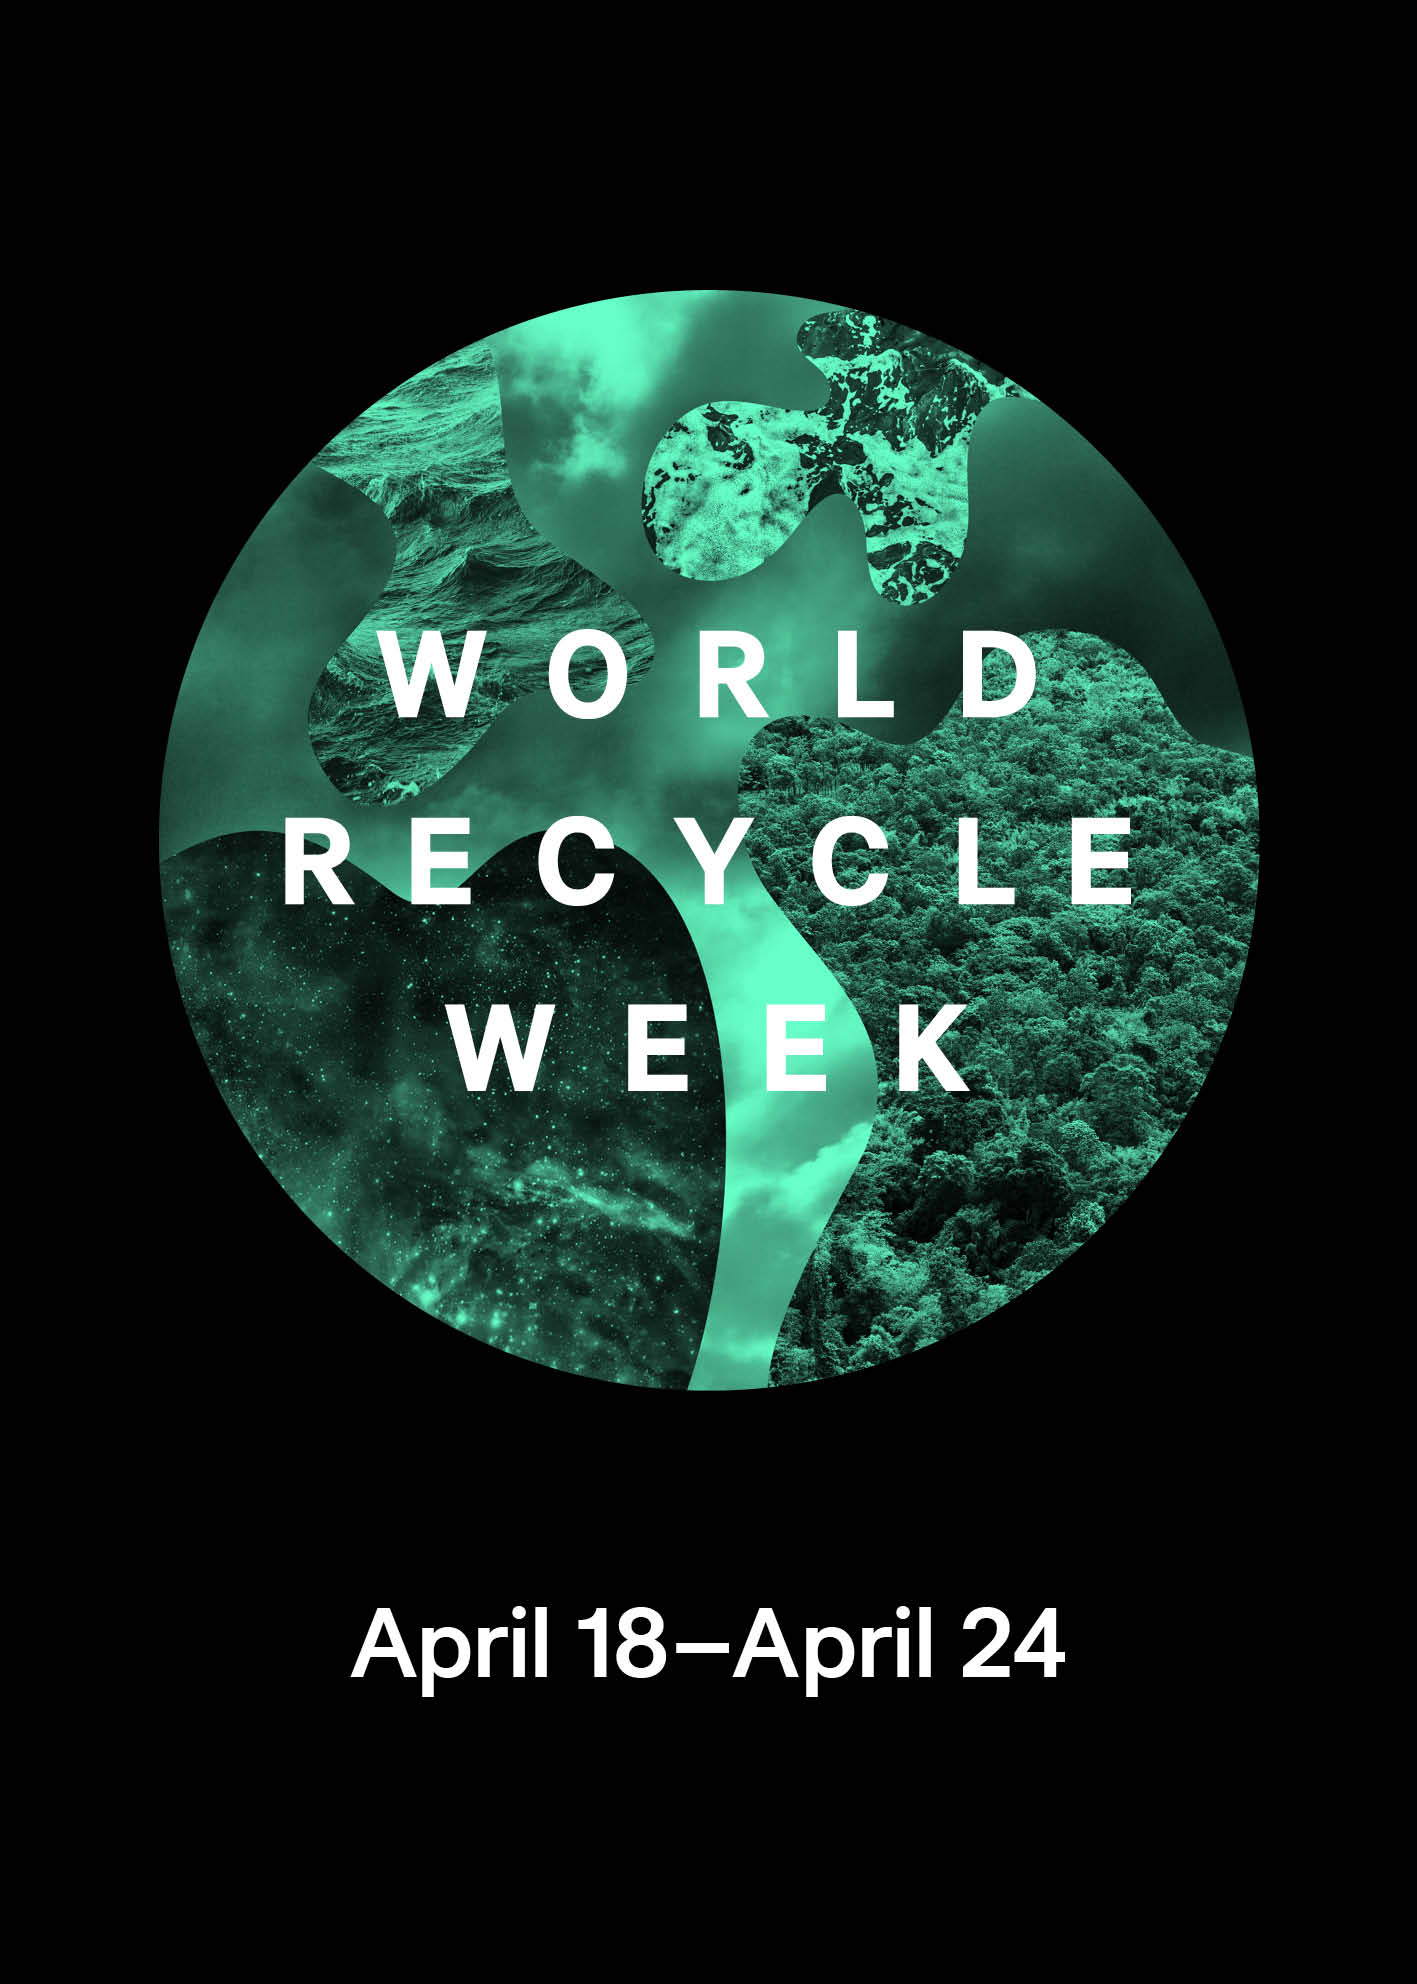 harpers-bazaar-malaysia-h&m-world-recycle-week